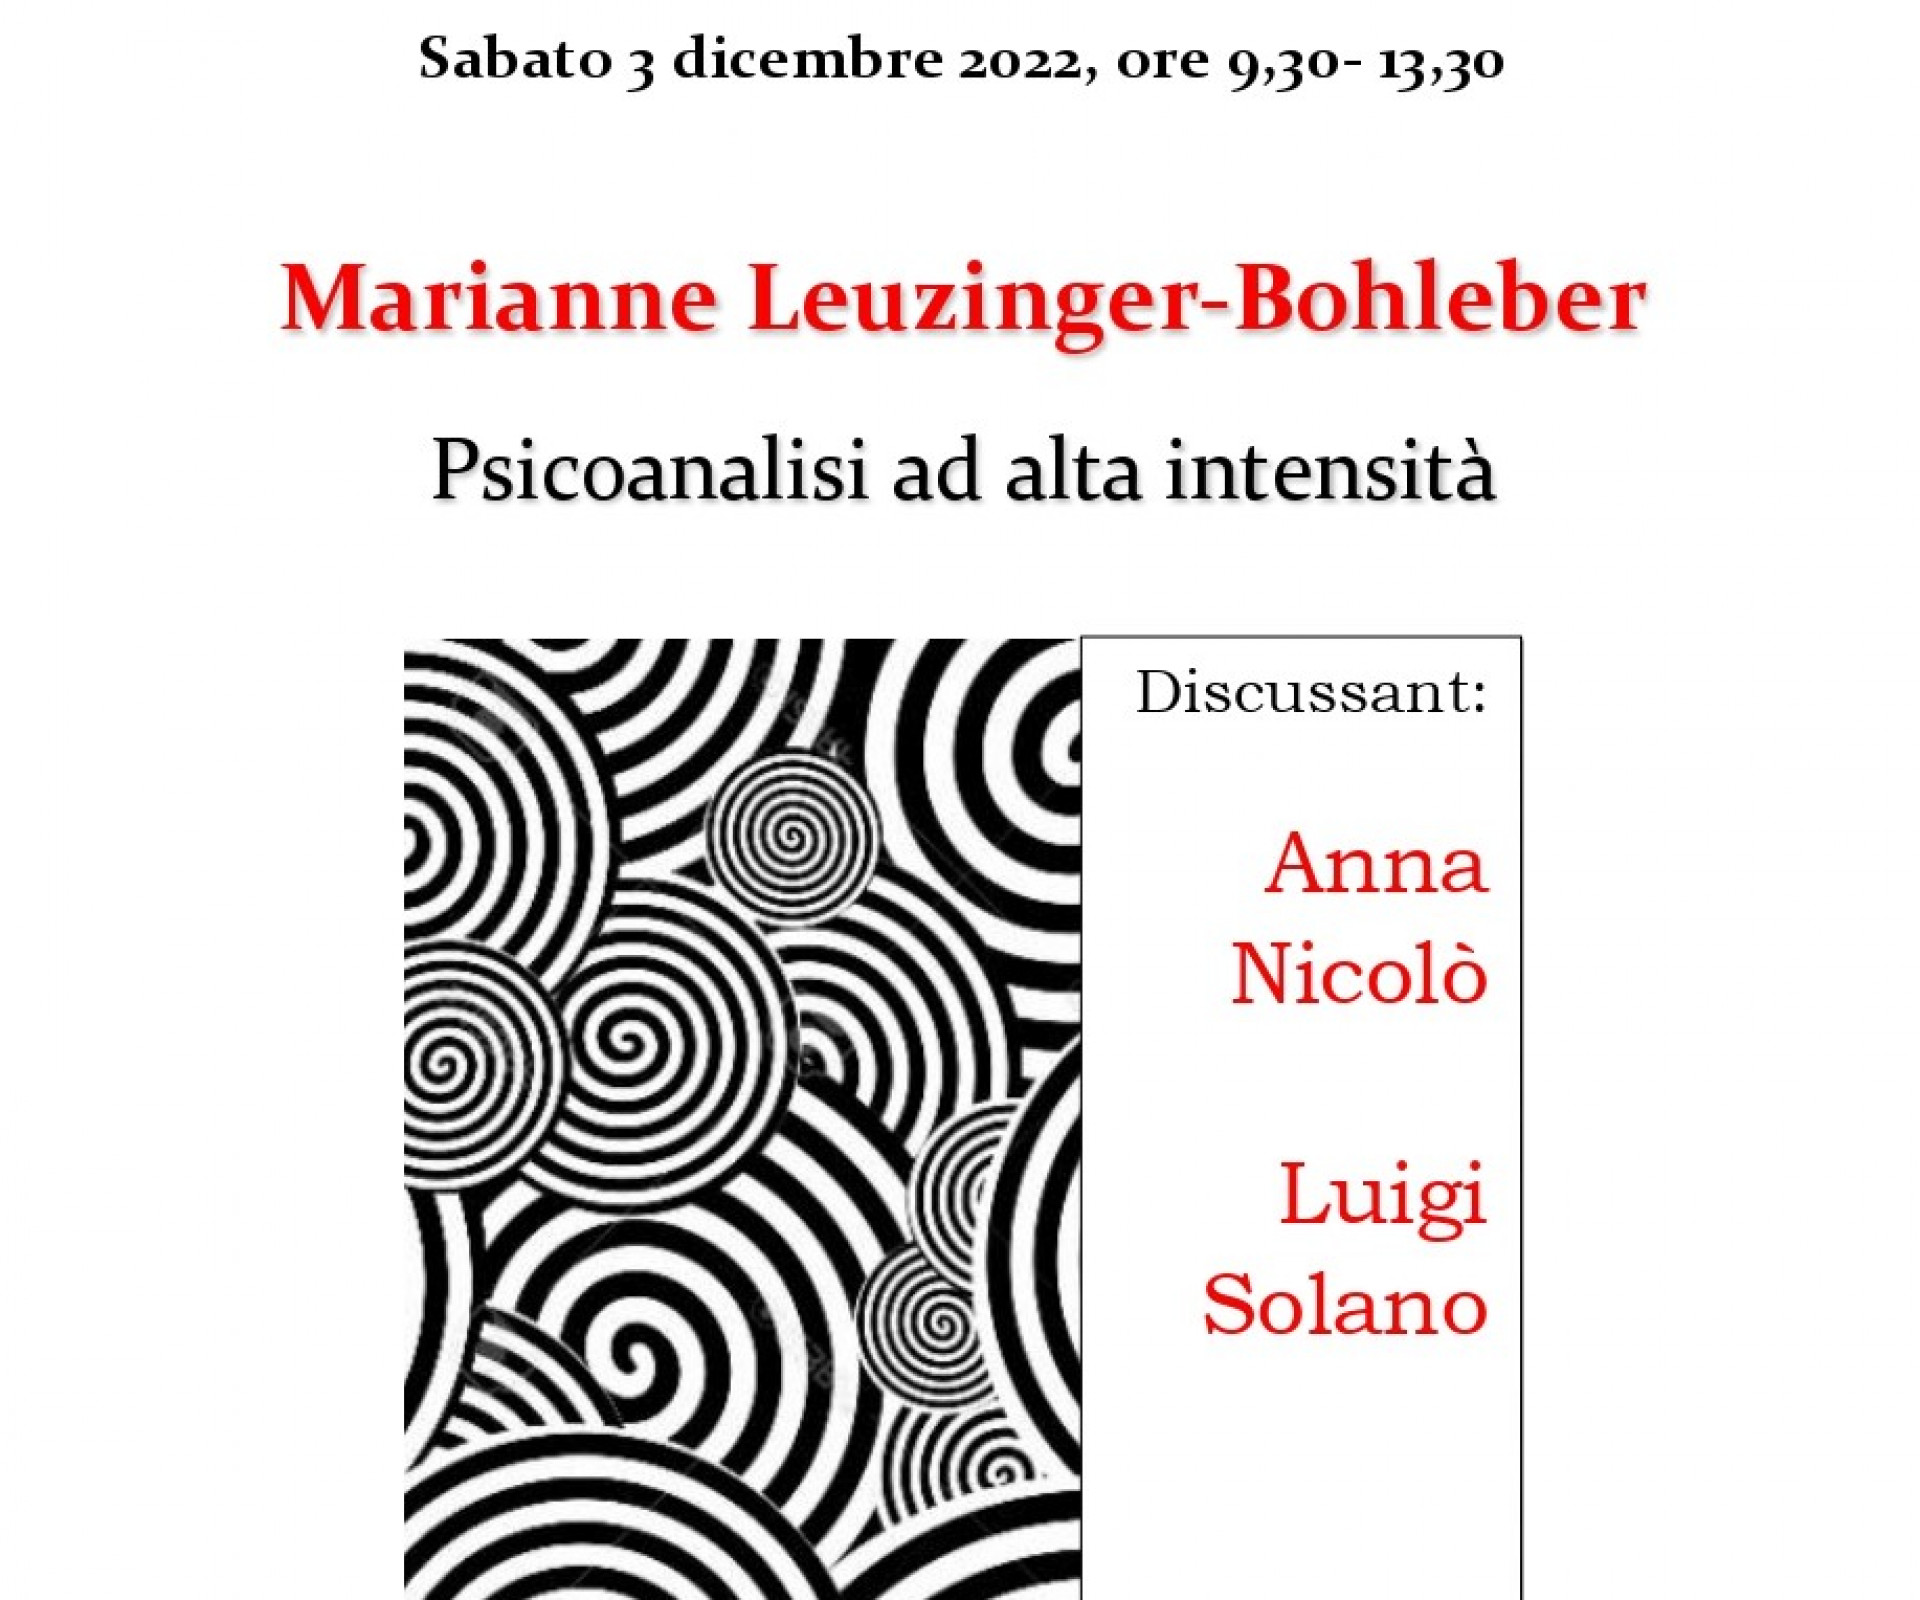 “Marianne Leuzinger-Bohleber. Psicoanalisi ad alta intensità”.